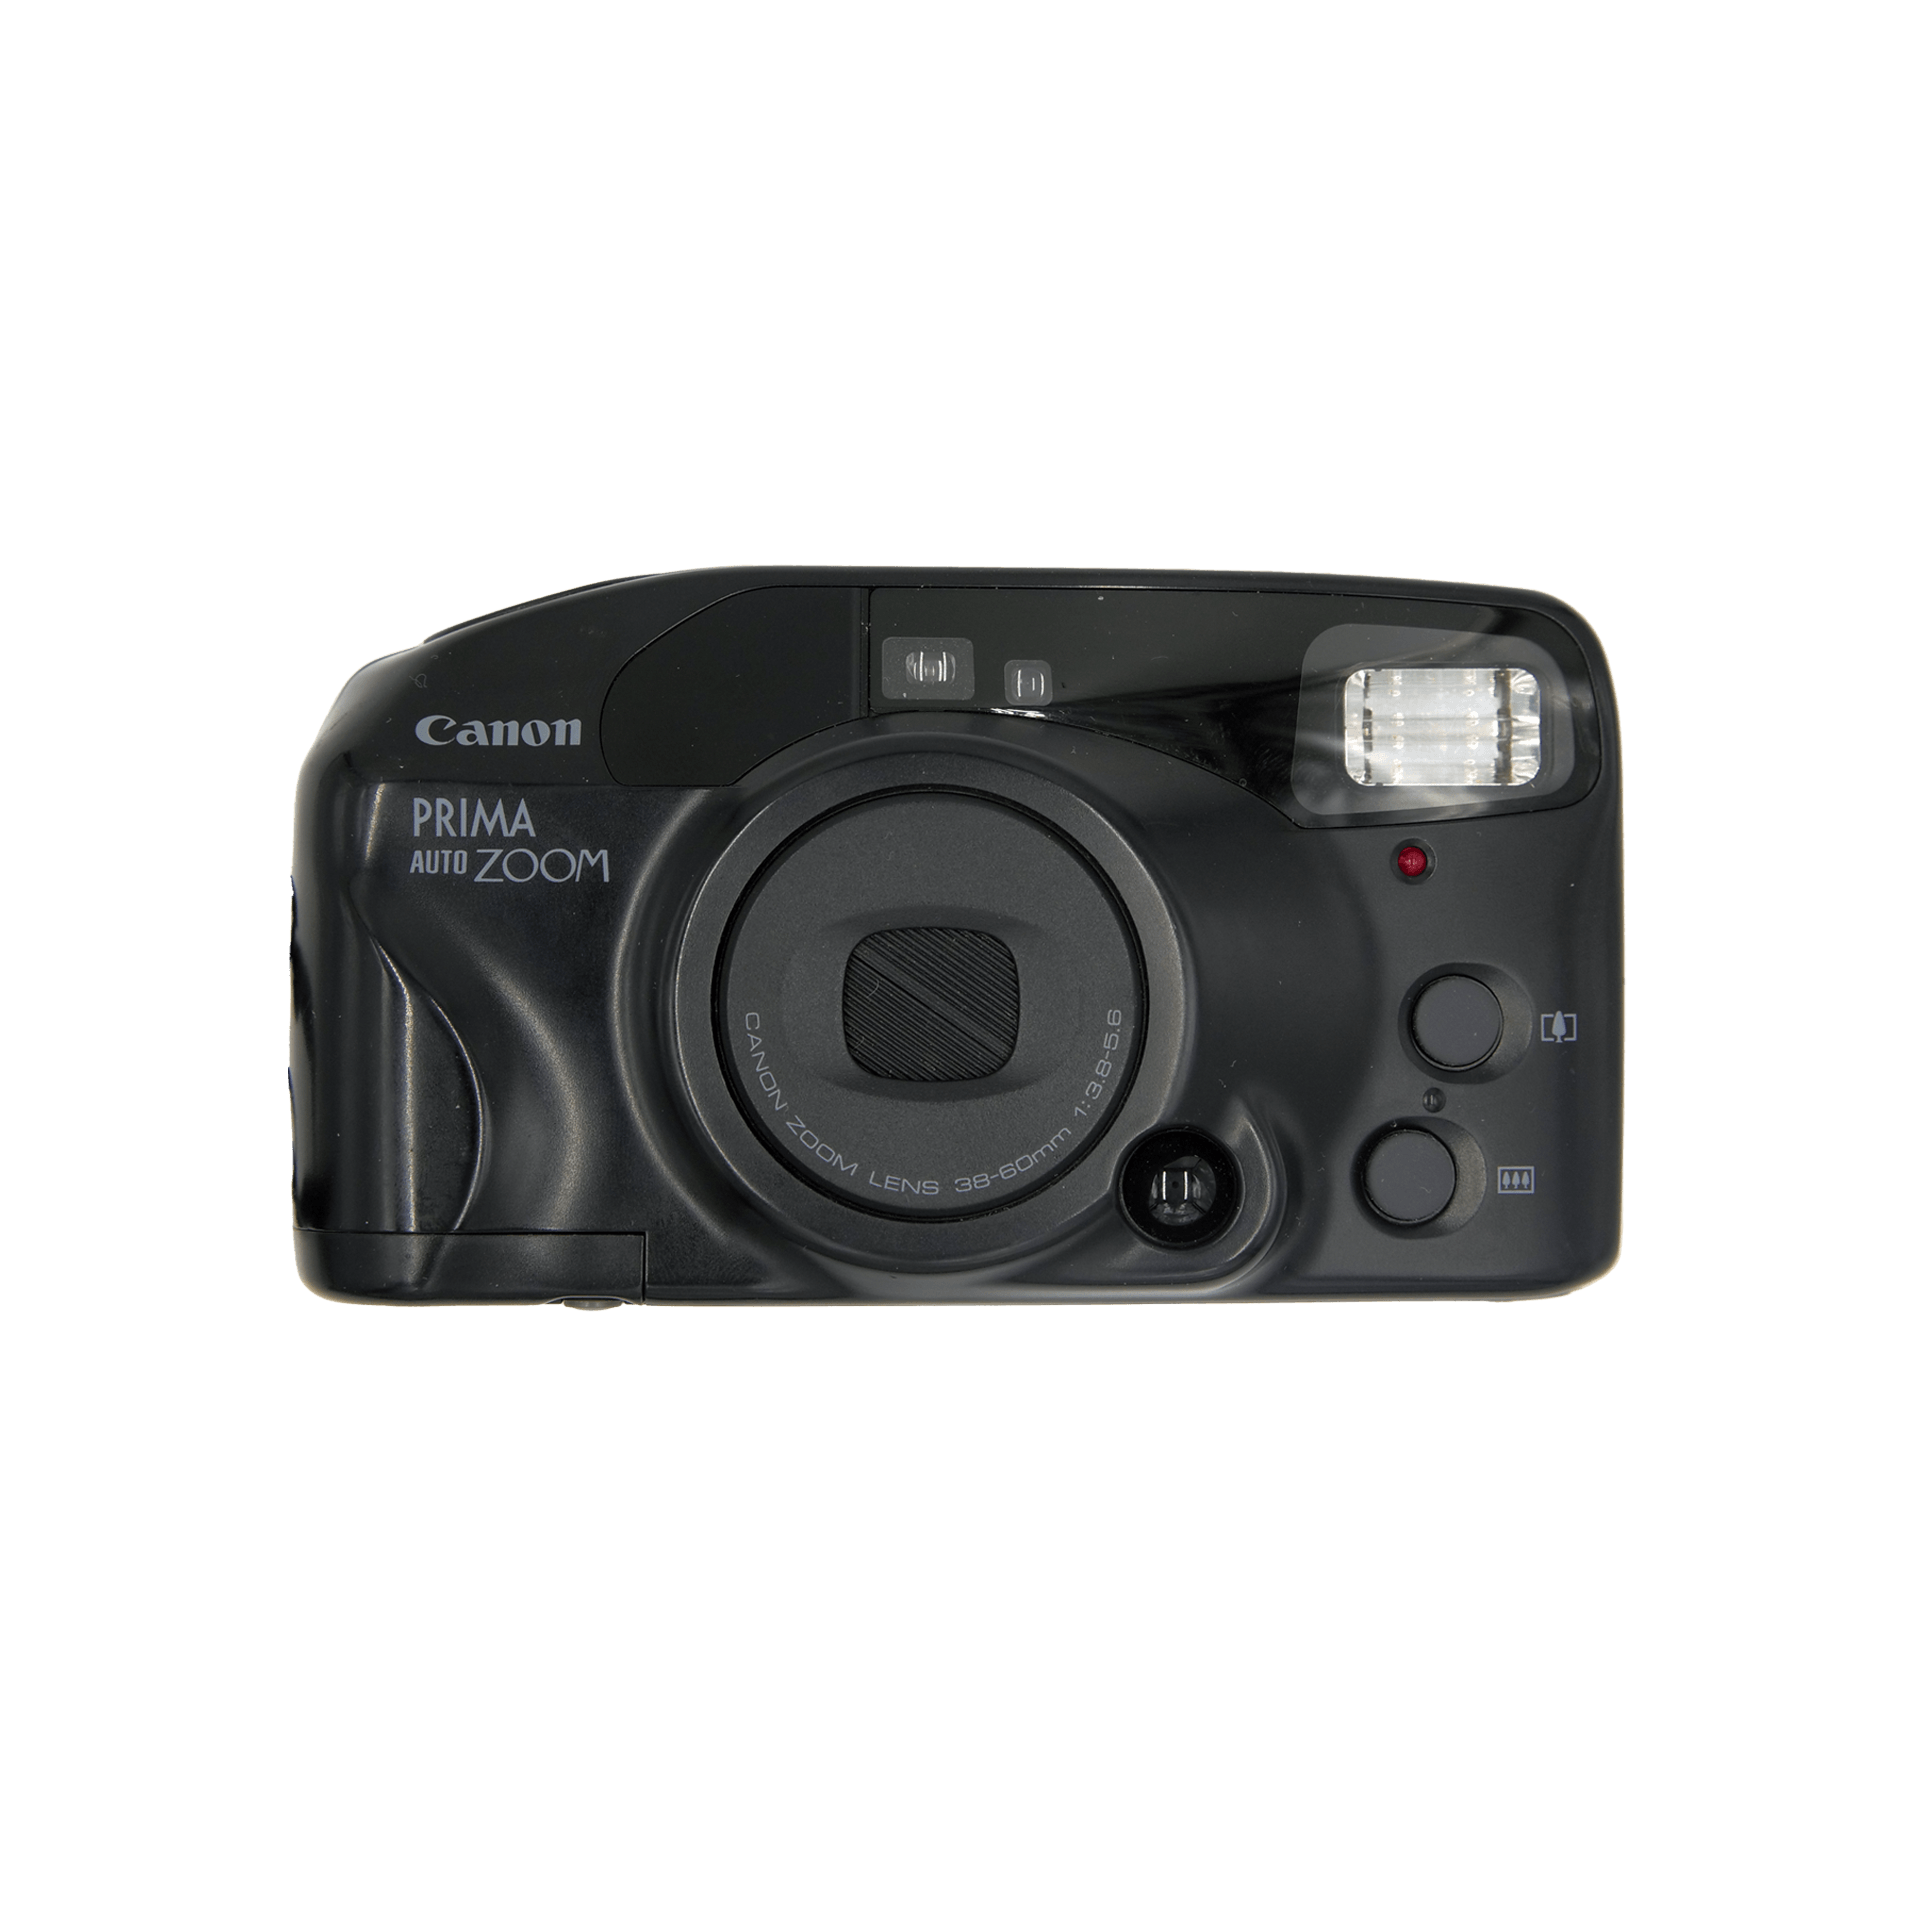 Canon Prima Auto Zoom - grainoverpixel